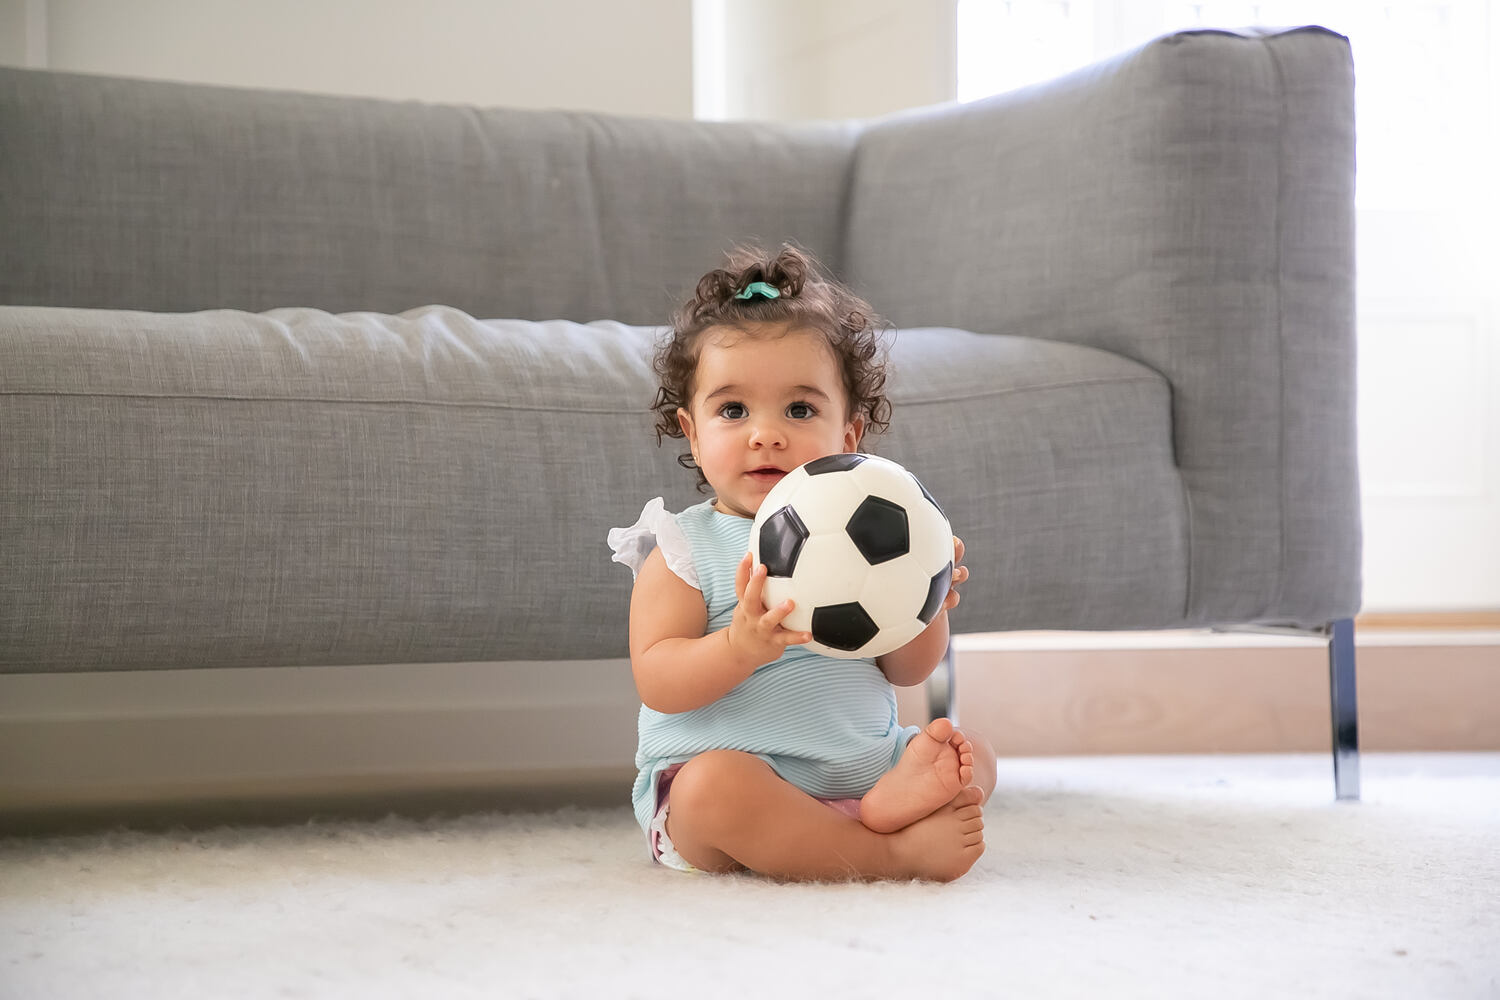 A toddler holding a ball